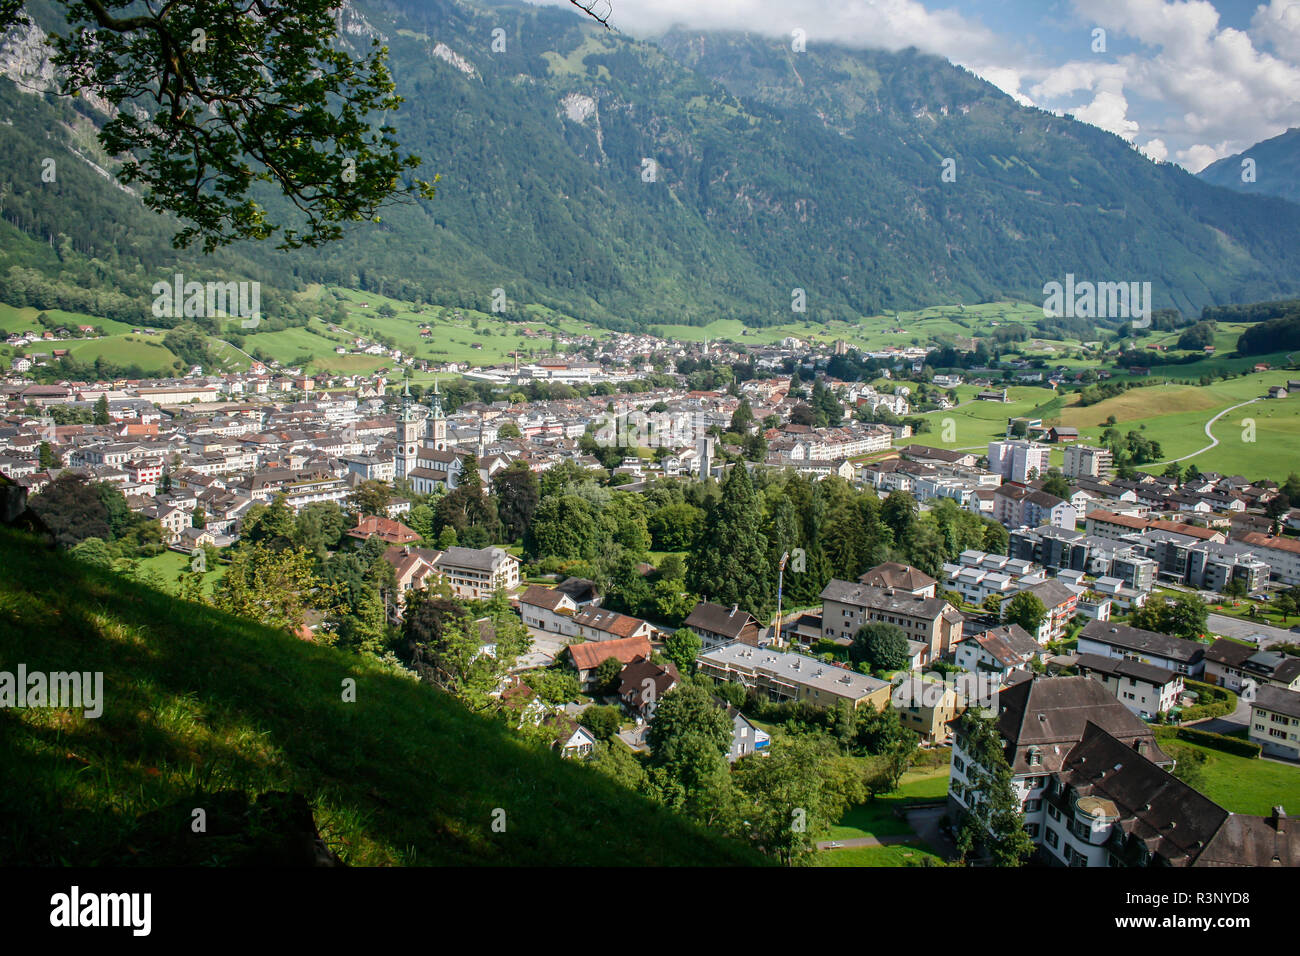 Town of Glarus from above, Switzerland Stock Photo